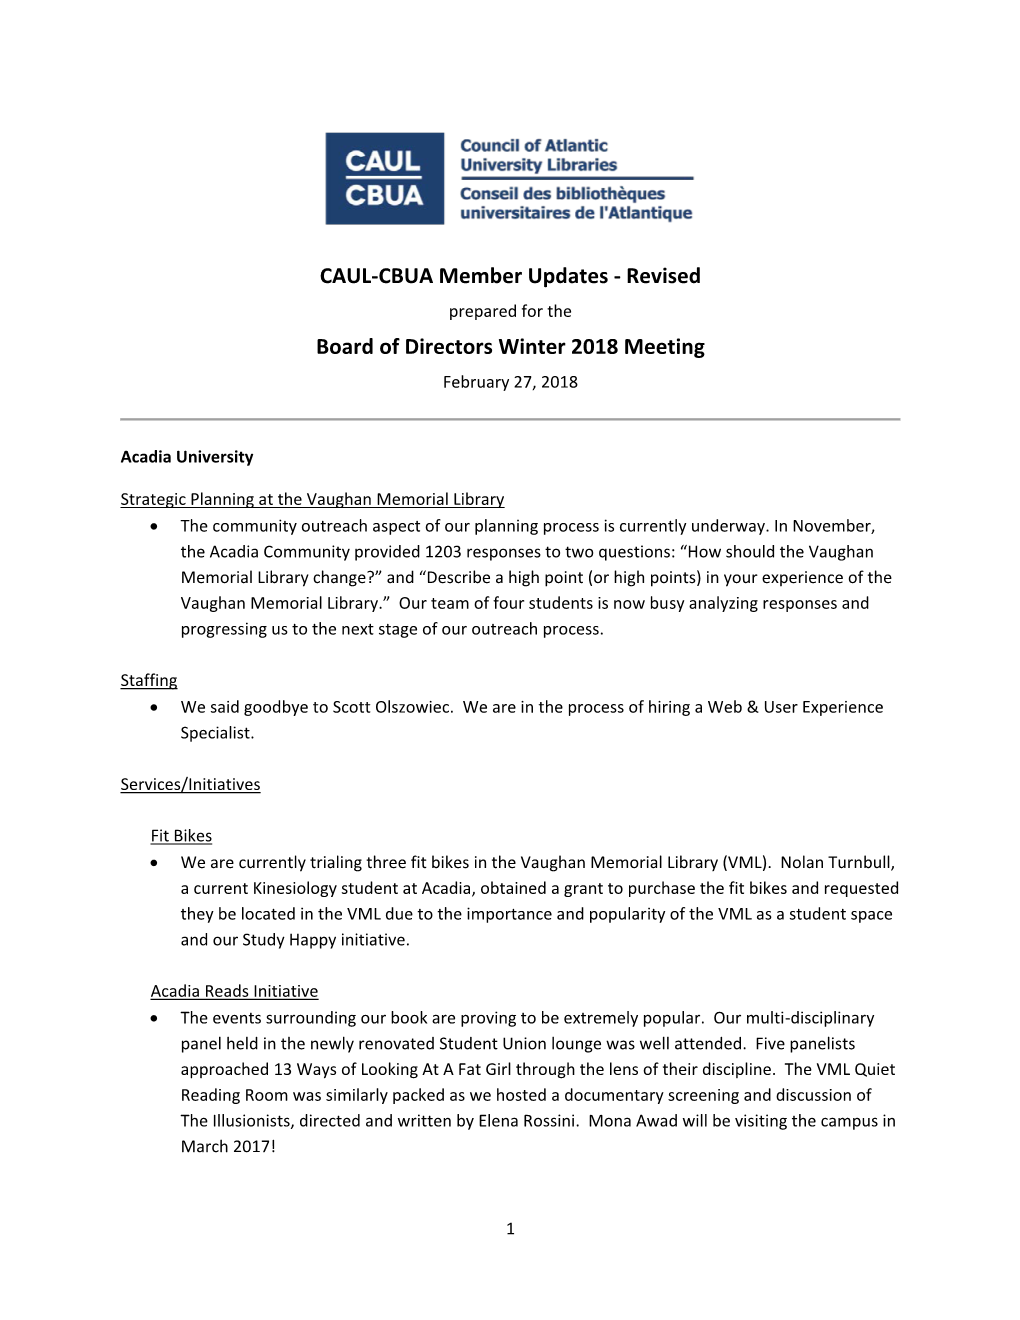 CAUL-CBUA Member Updates - Revised Prepared for the Board of Directors Winter 2018 Meeting February 27, 2018